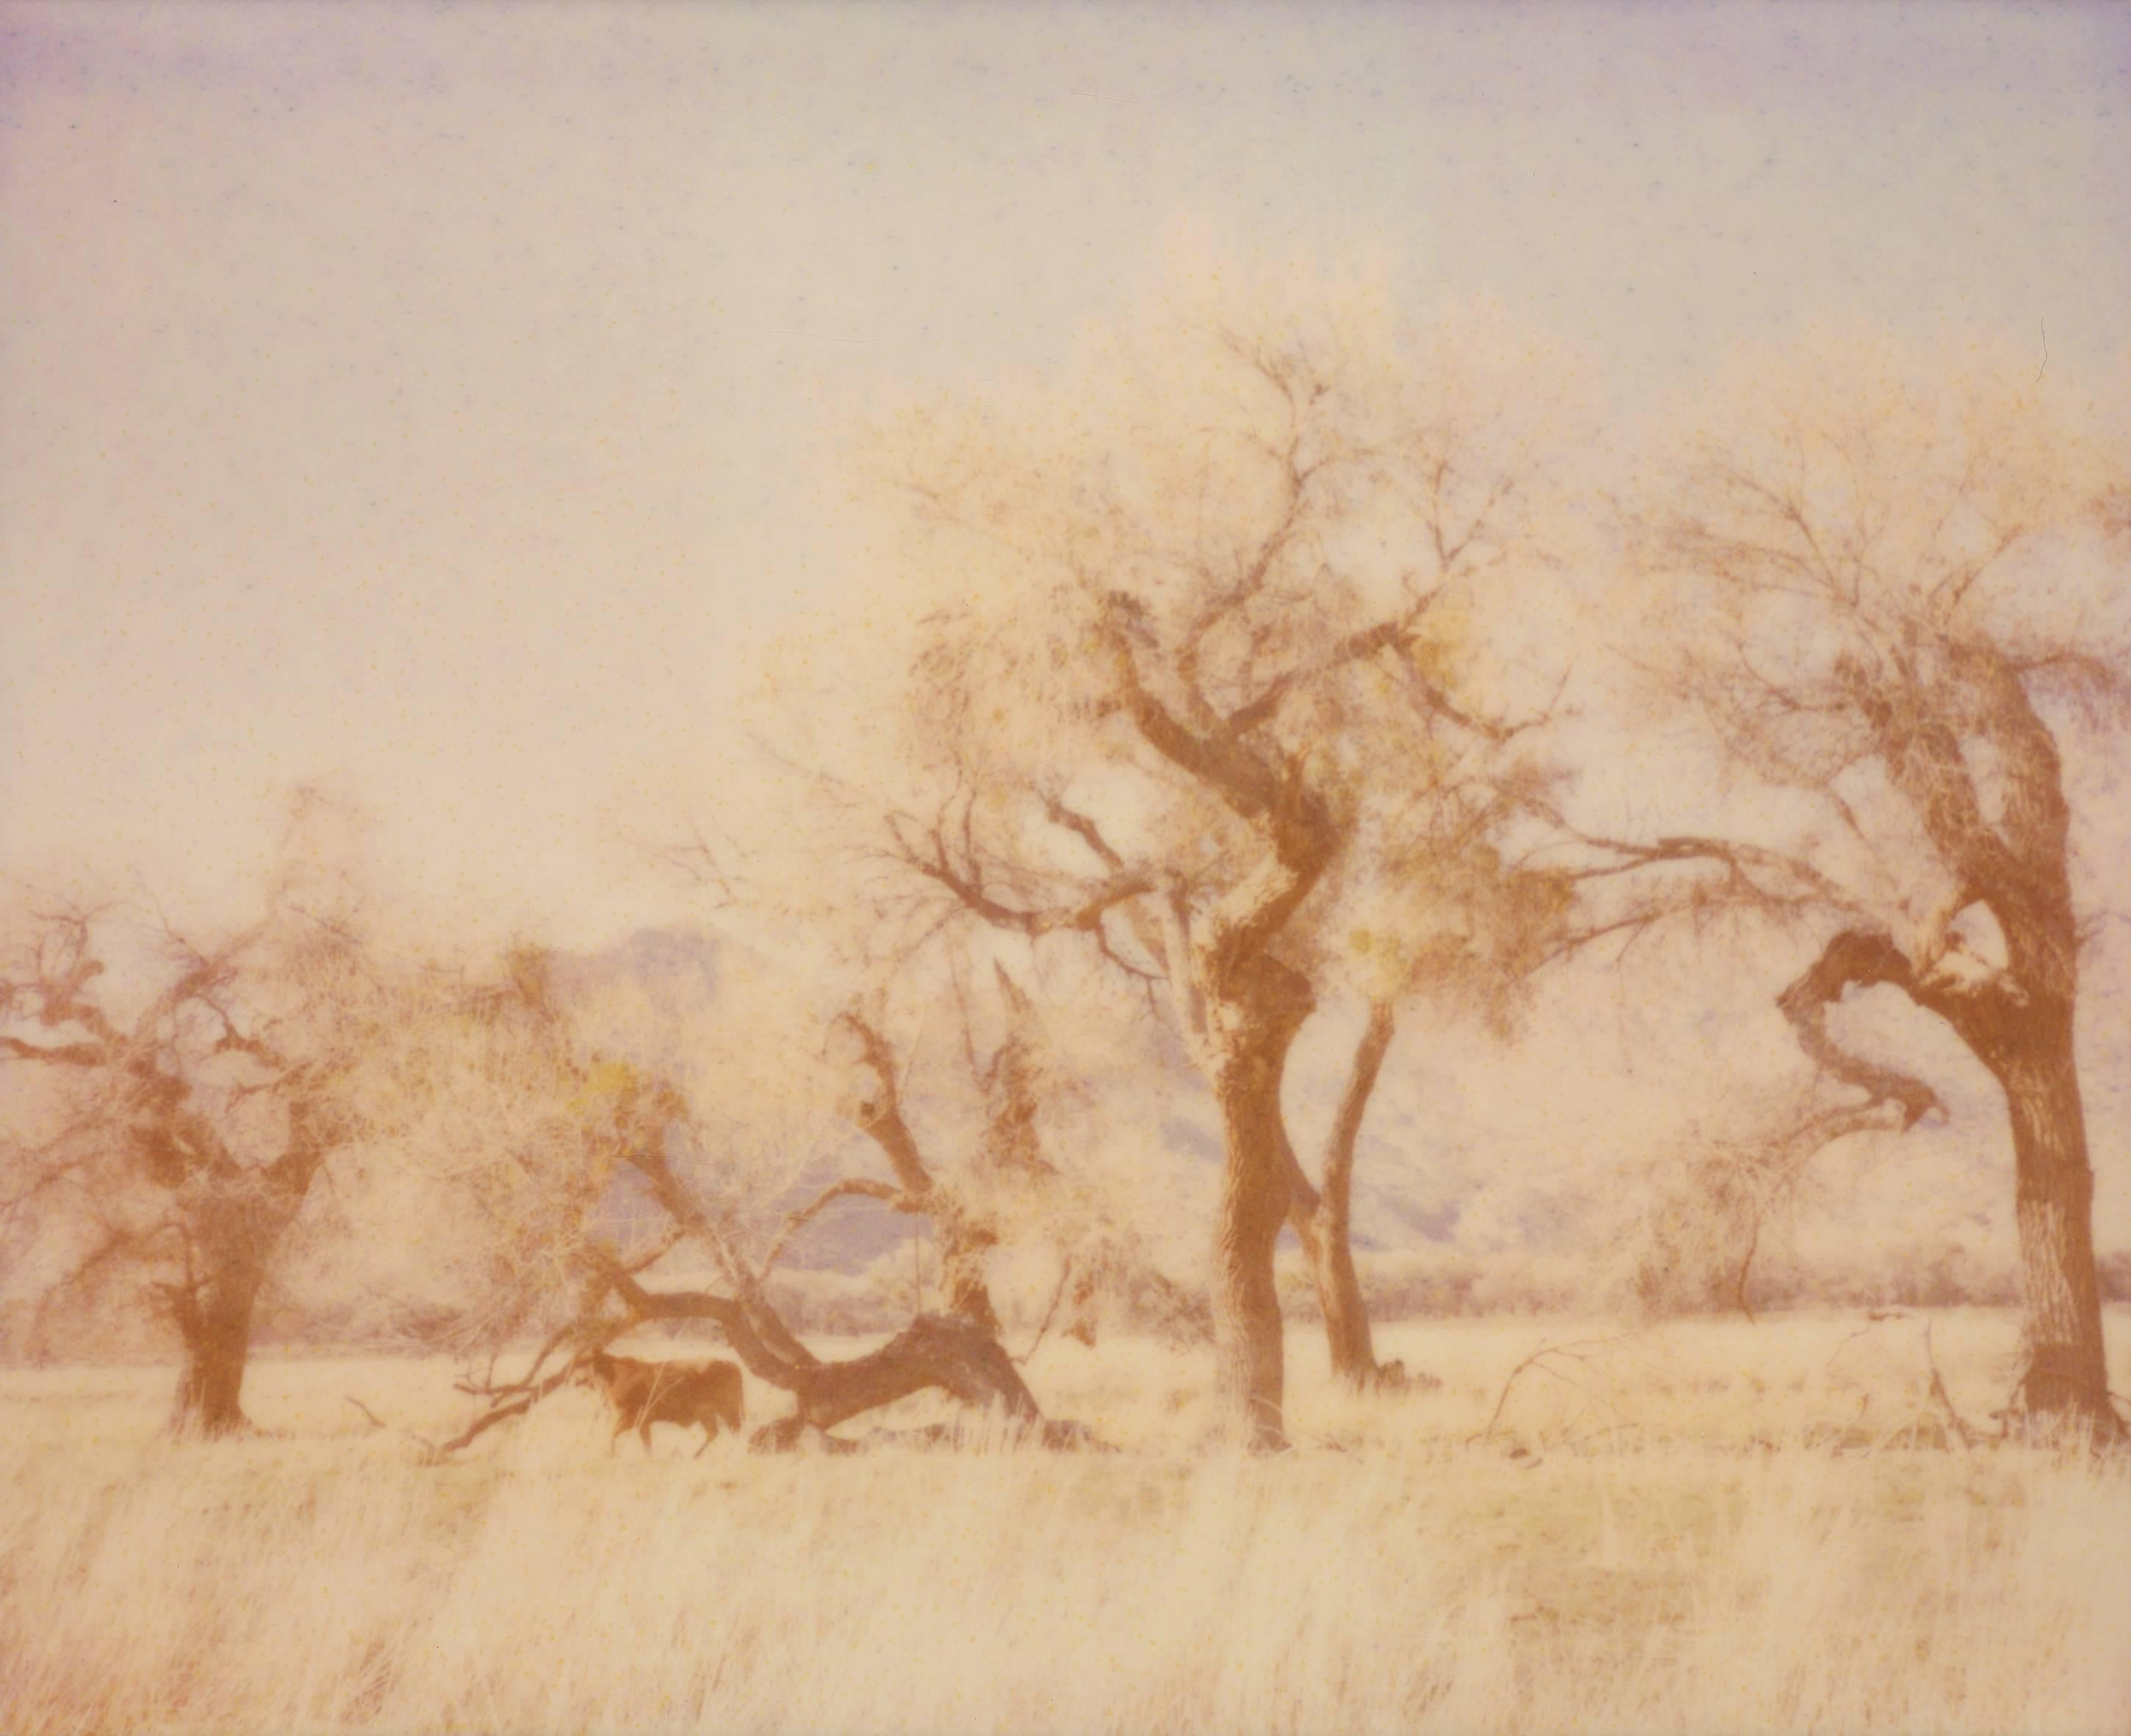 Stefanie Schneider Color Photograph - Dreaming of Buffalo - Contemporary, Landscape, USA, Polaroid, photograph